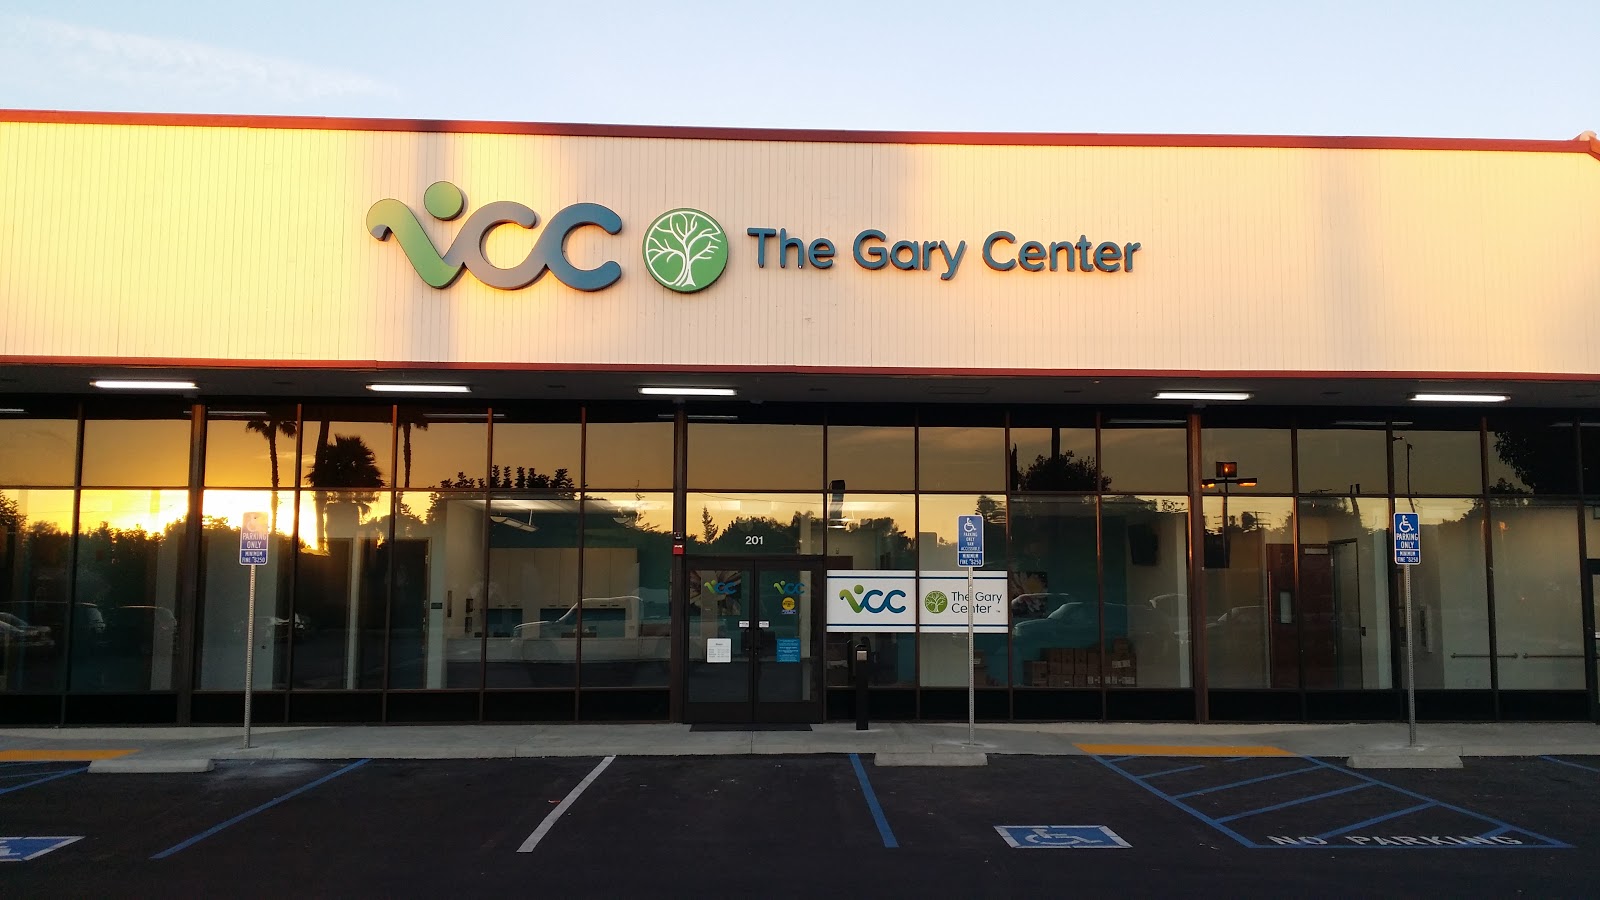 VCC - Vista Community Clinic - The Gary Center